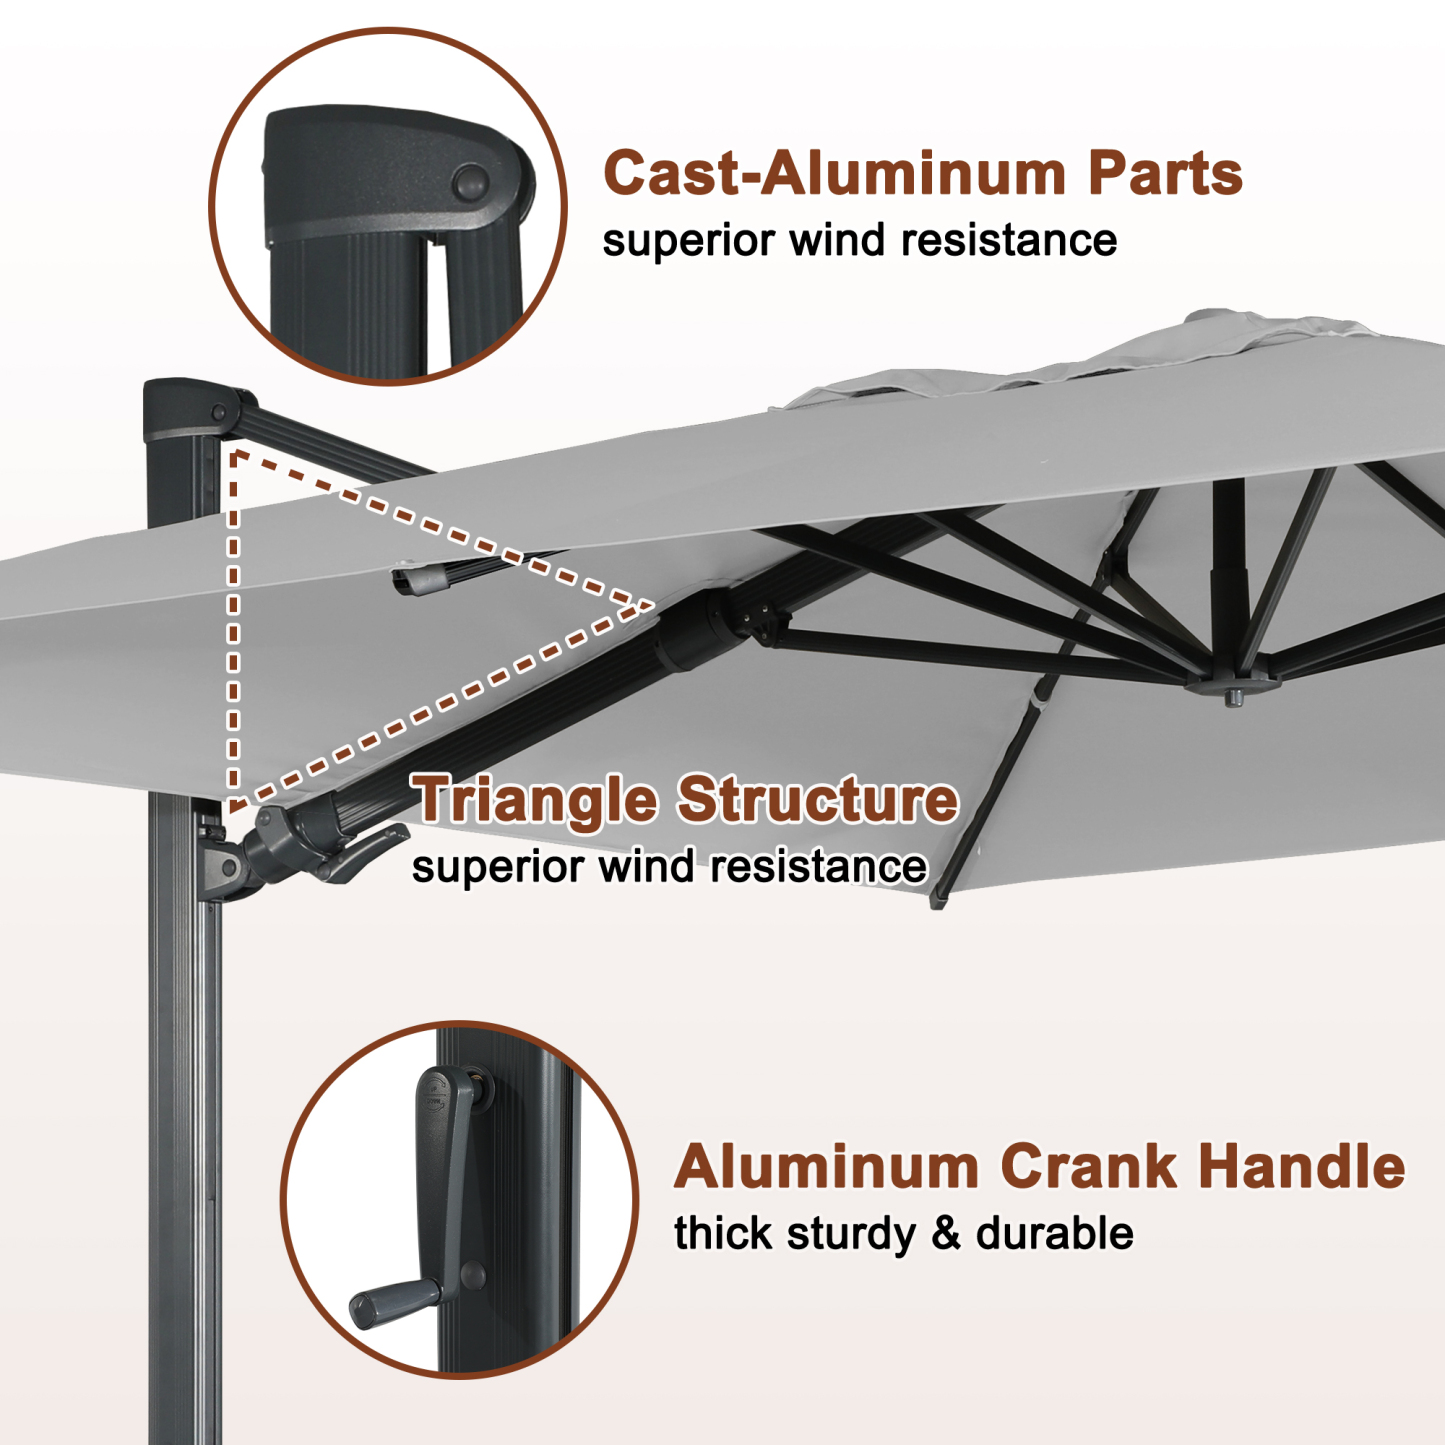 13ft Square Bluetooth Ambient Light 360-Degree Tilt Outdoor Patio Umbrella